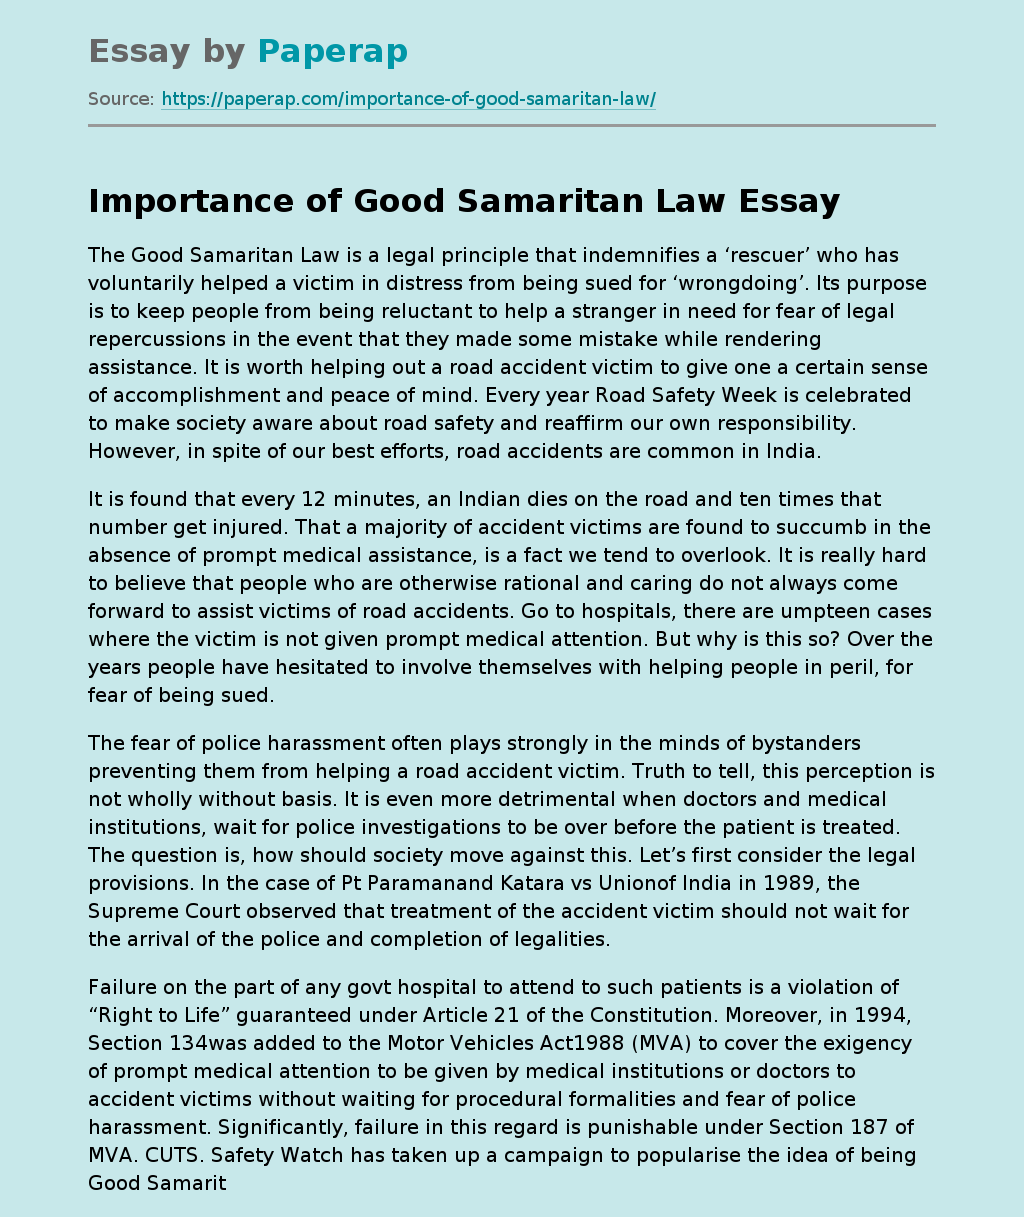 Importance of Good Samaritan Law